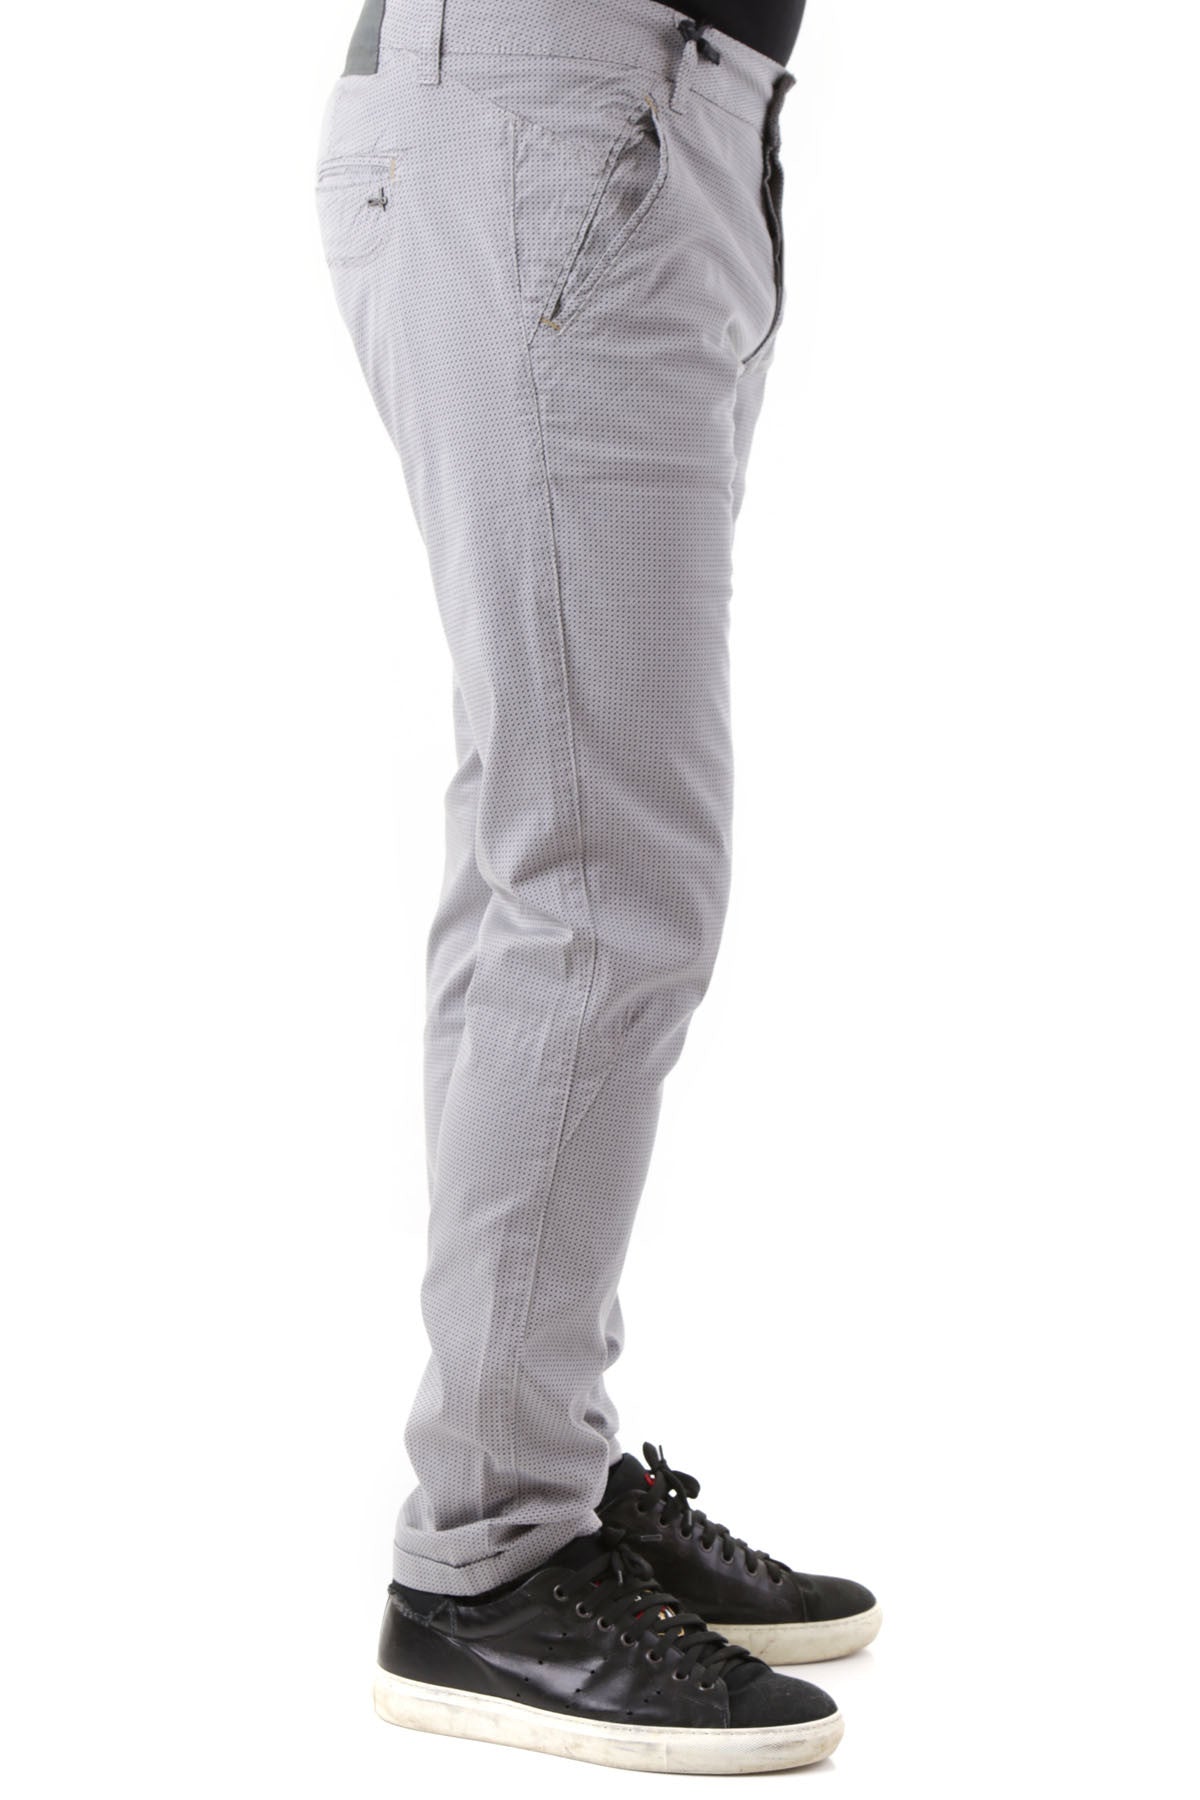 Pantalone Uomo Chino Jeans Slim Fit Casual Elegante Tasche America Absolut Joy M